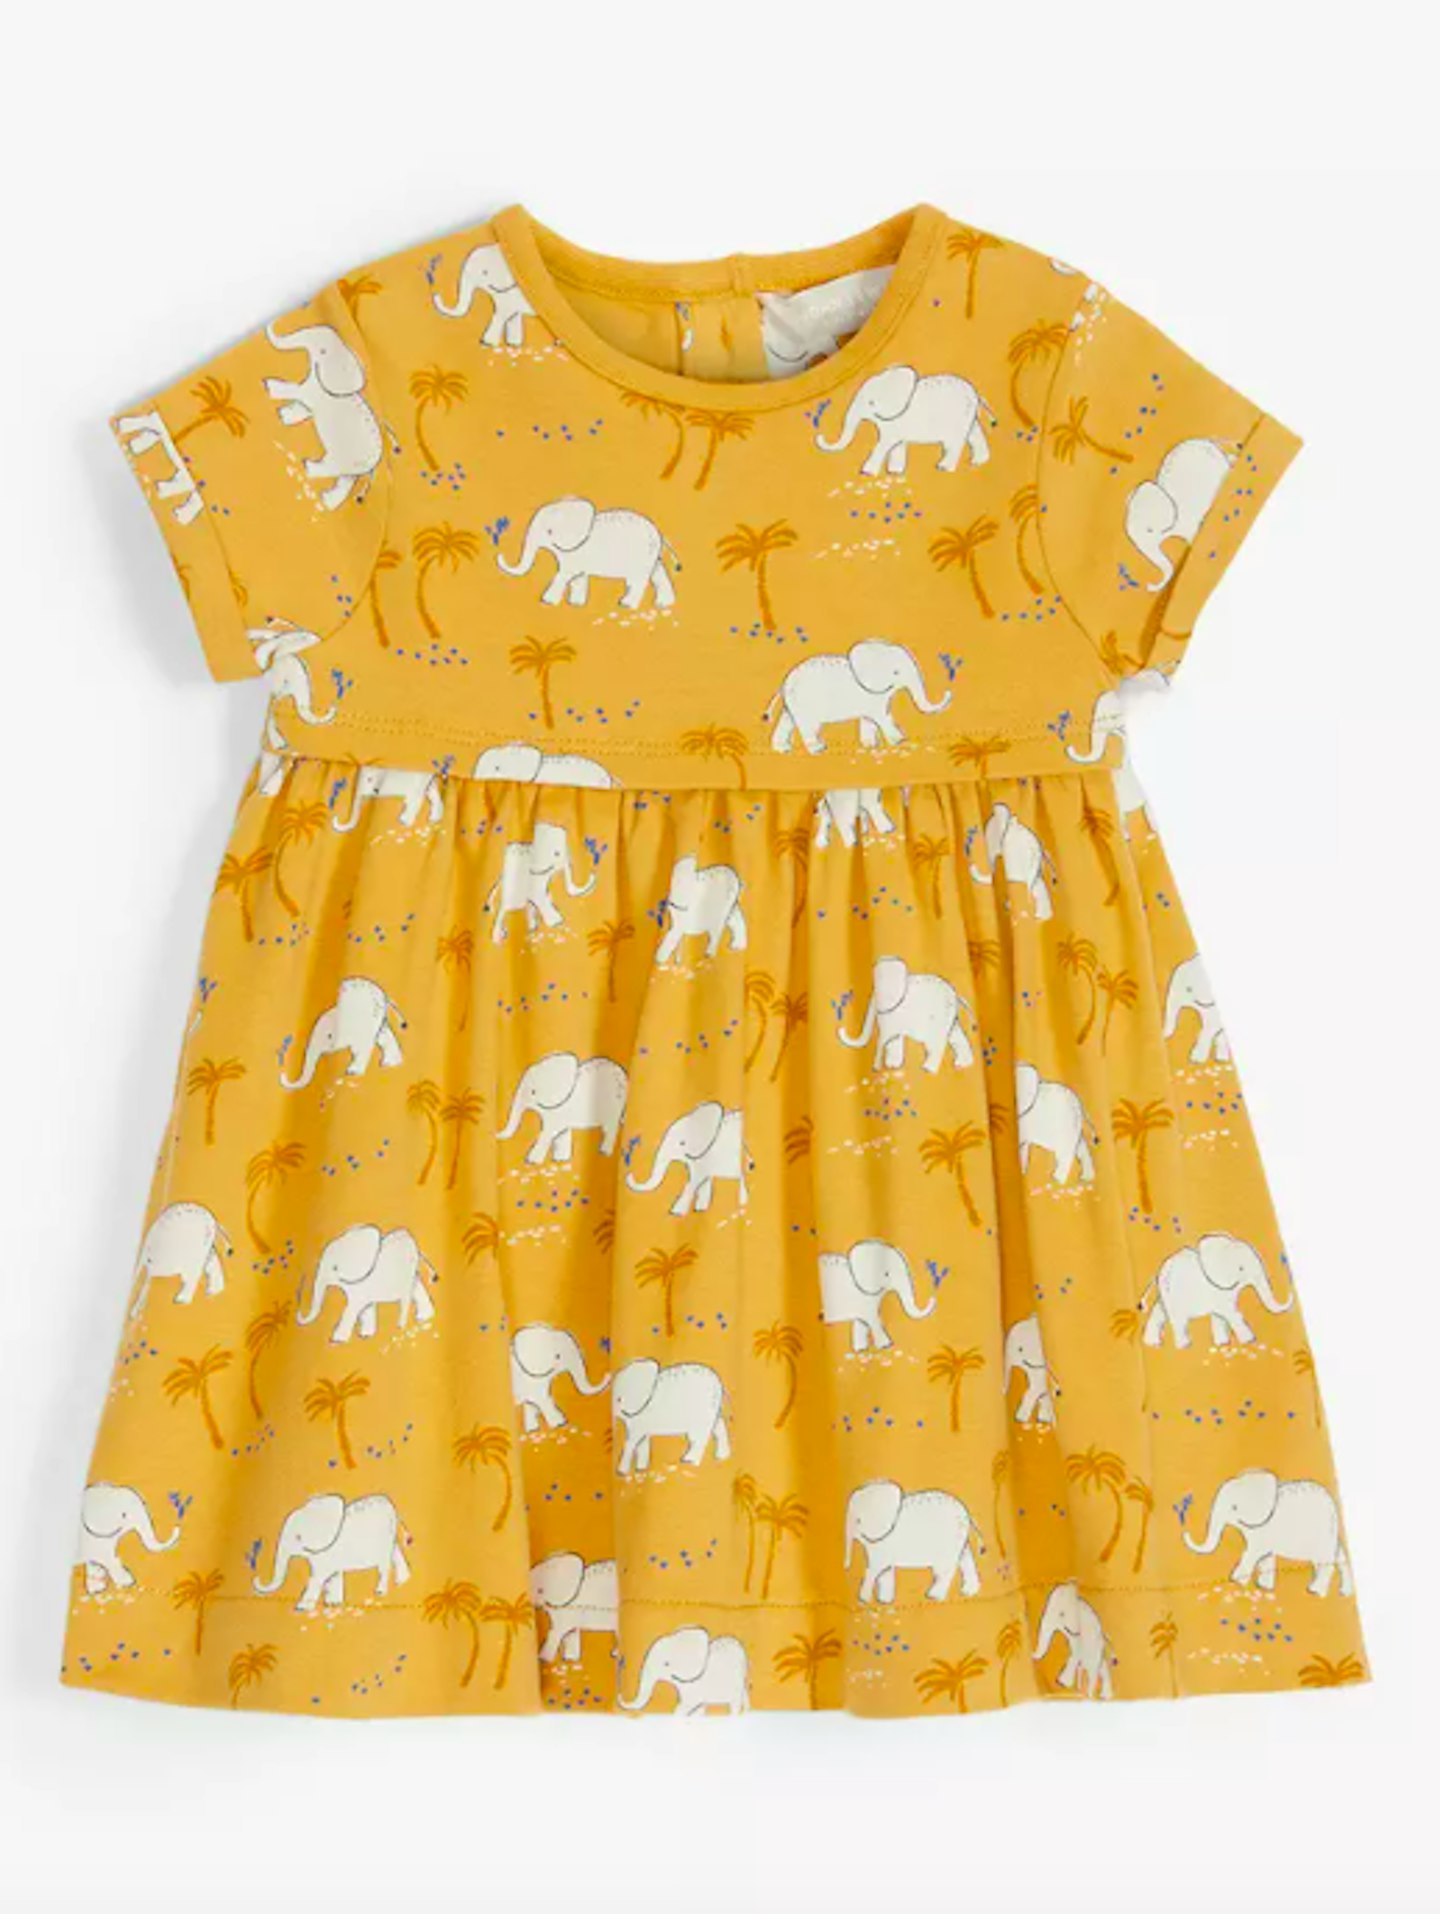 Organic Cotton Elephant Print Dress, £7